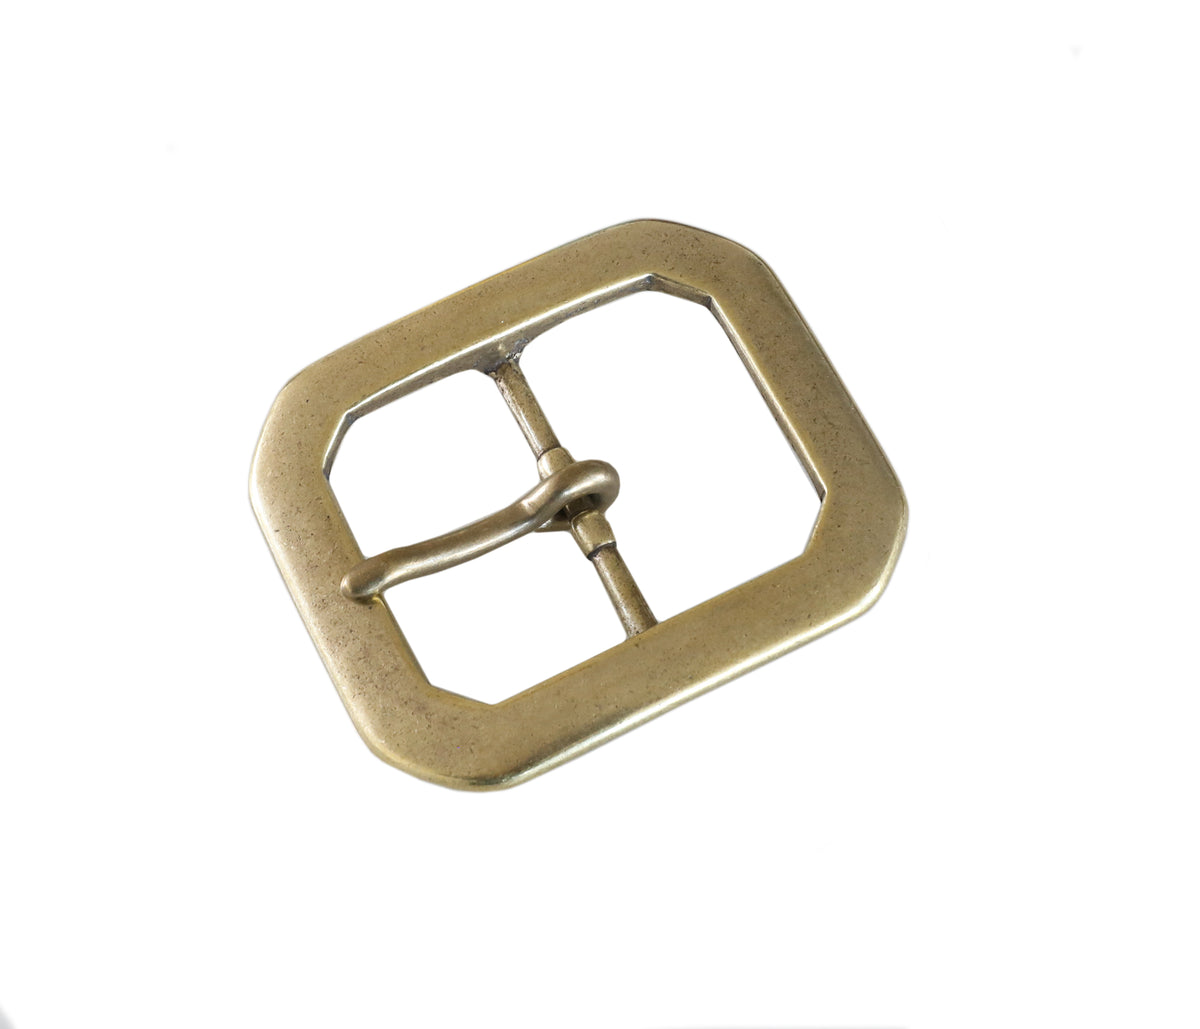 Japan Brass Co 🇯🇵 - "Octagonal" Belt Buckle (Solid Brass)